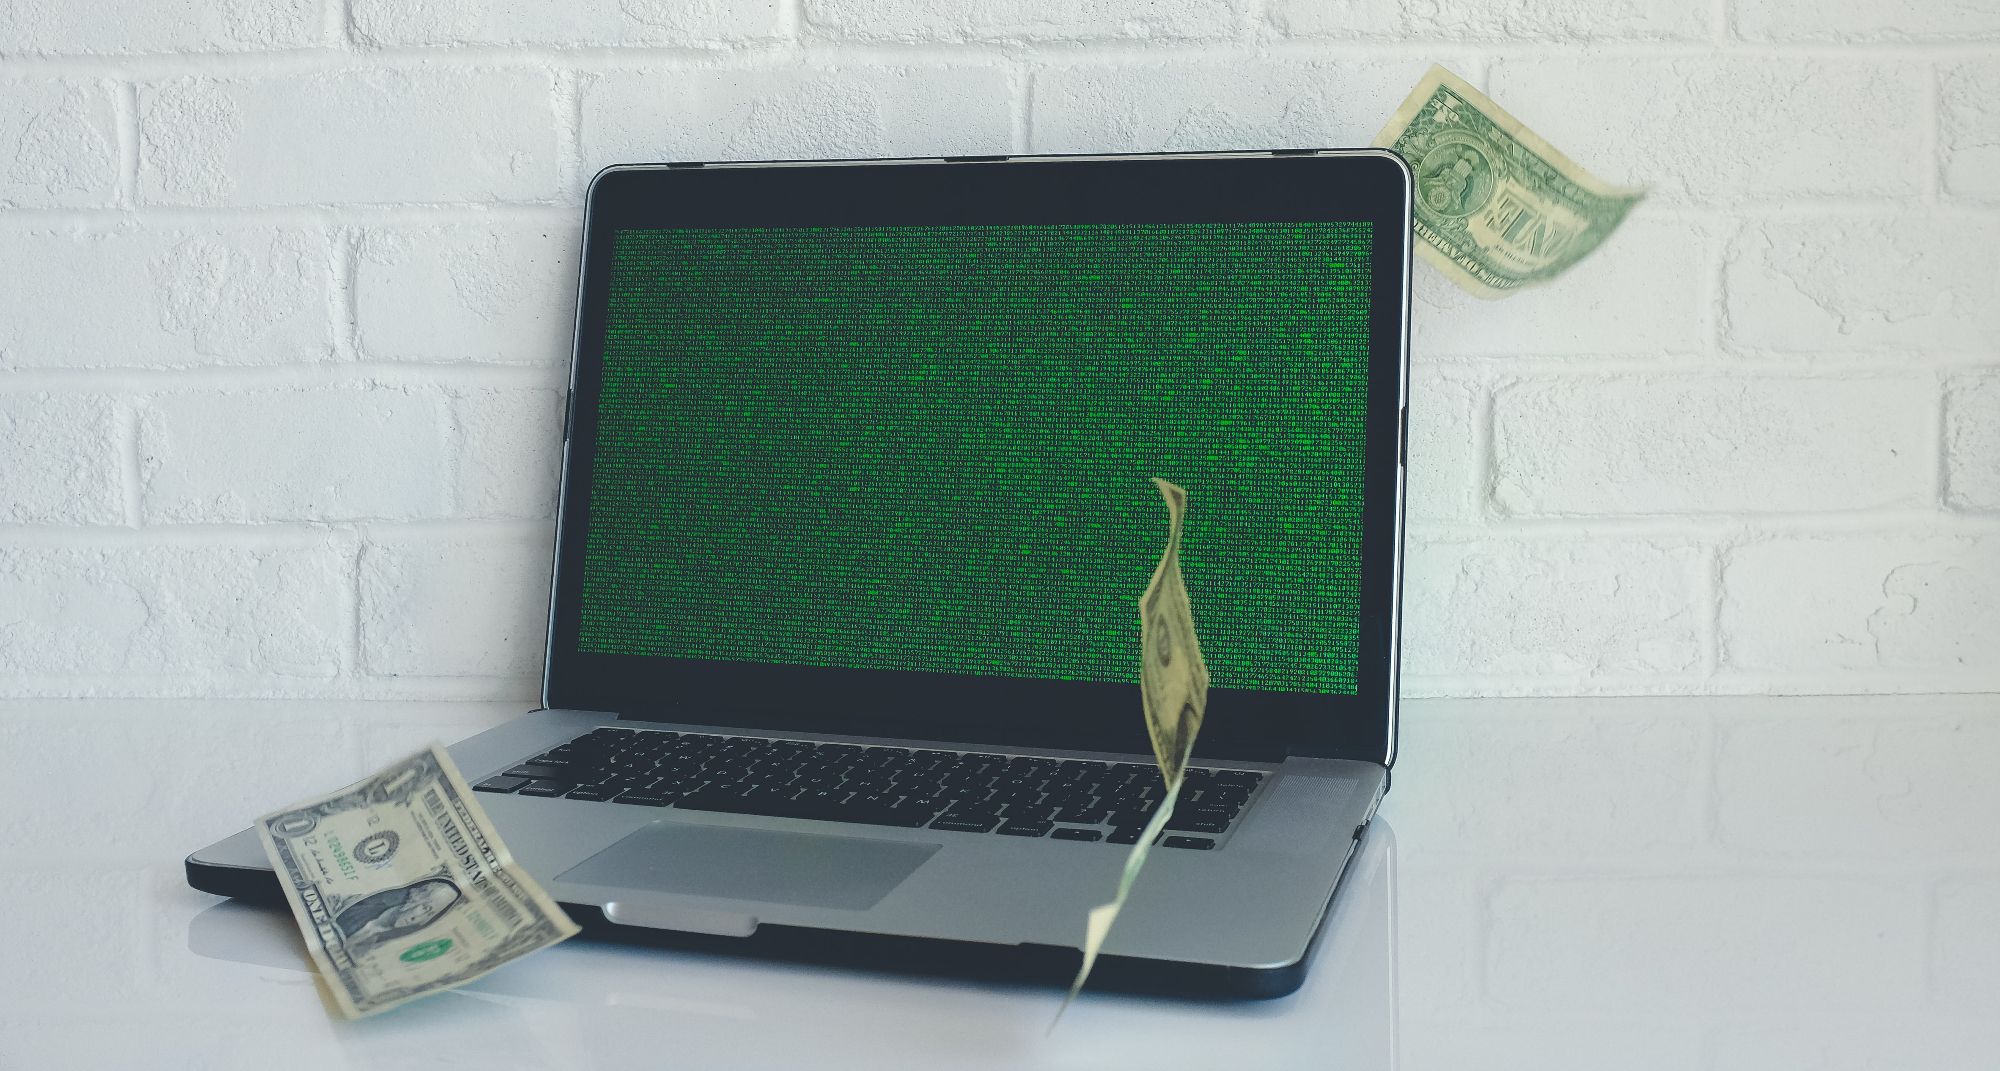 green matrix screen on laptop with falling dollar bills surrounding